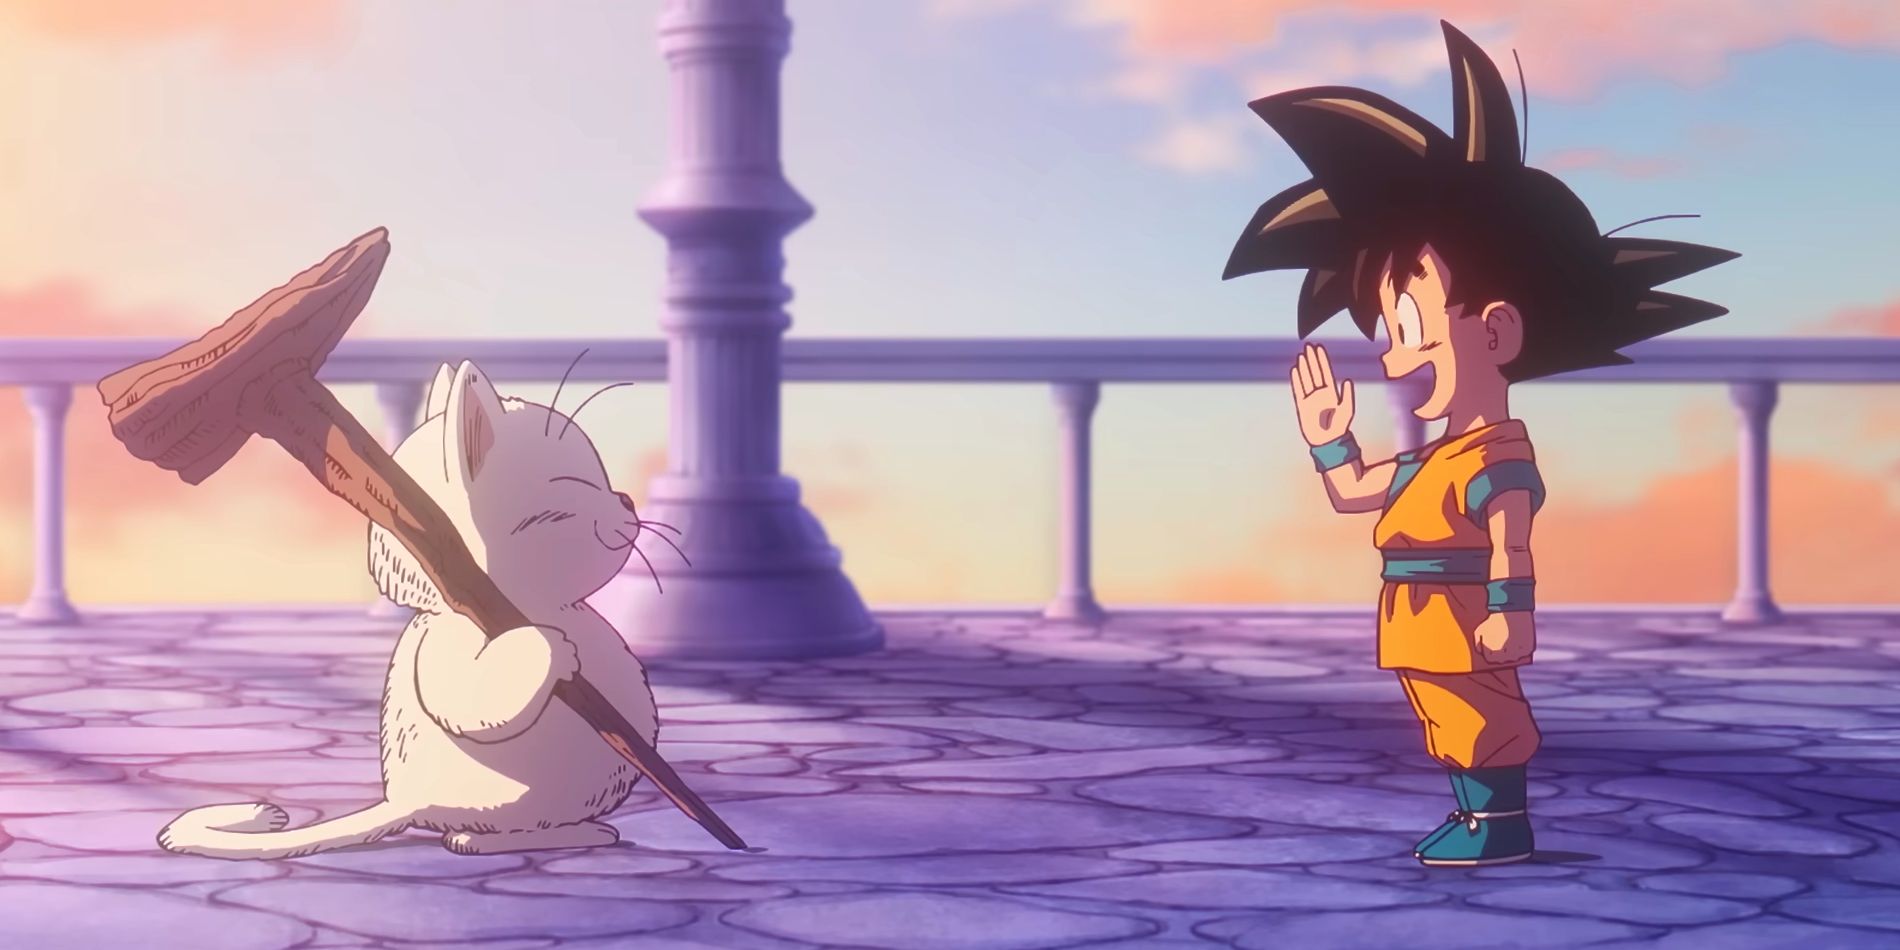 Akira Toriyama confirmed to return for new Dragon Ball anime in 2023